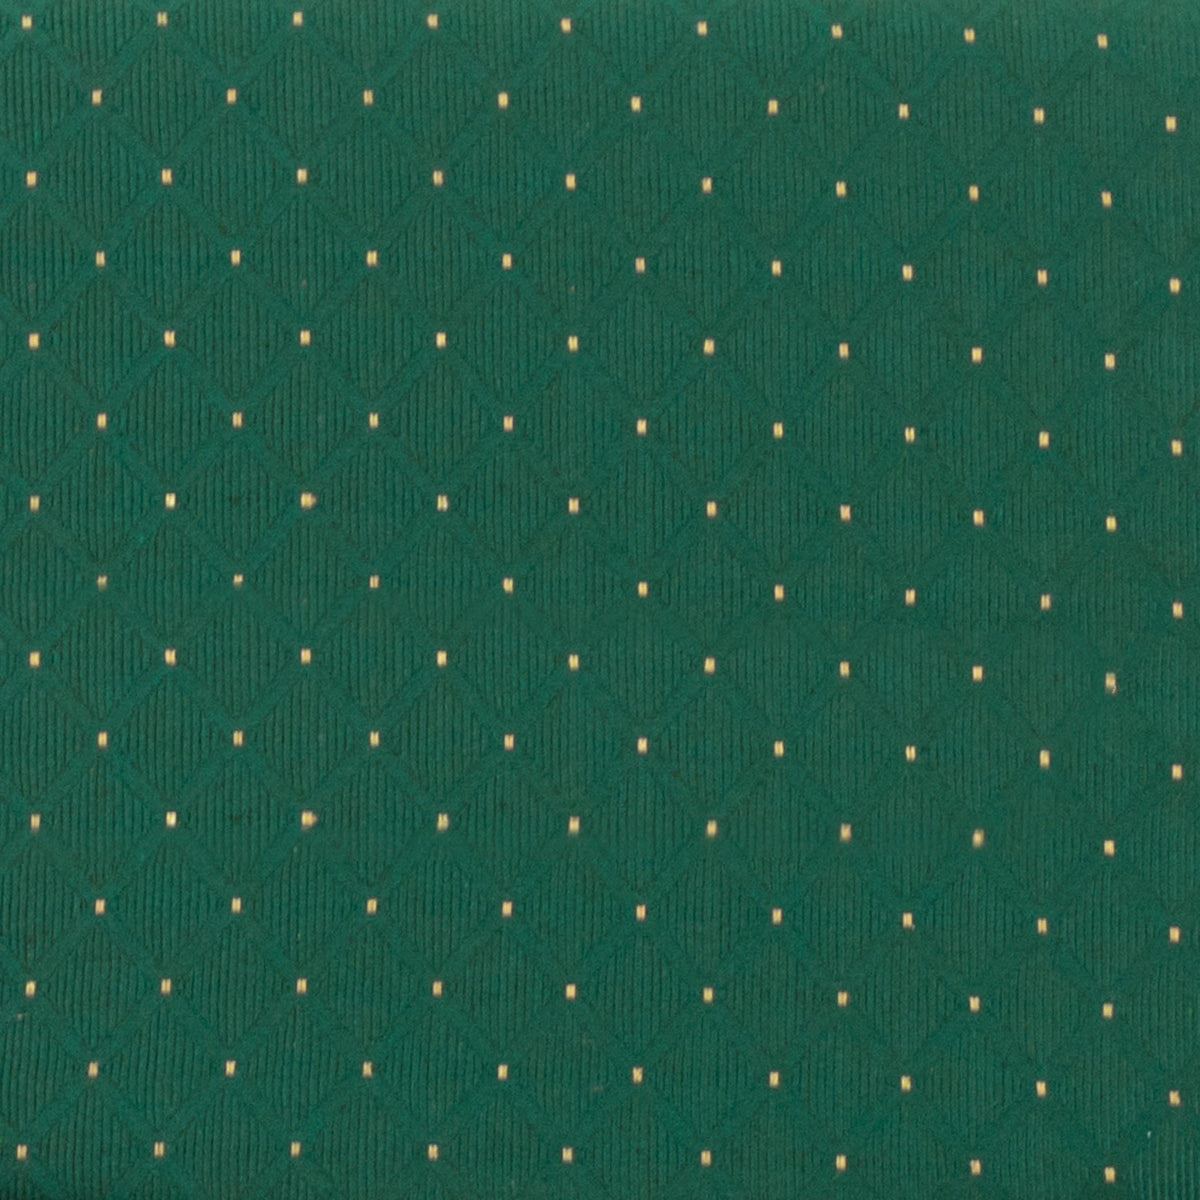 Green Patterned Fabric/Gold Vein Frame |#| 18.5inchW Church Chair in Green Patterned Fabric with Book Rack - Gold Vein Frame